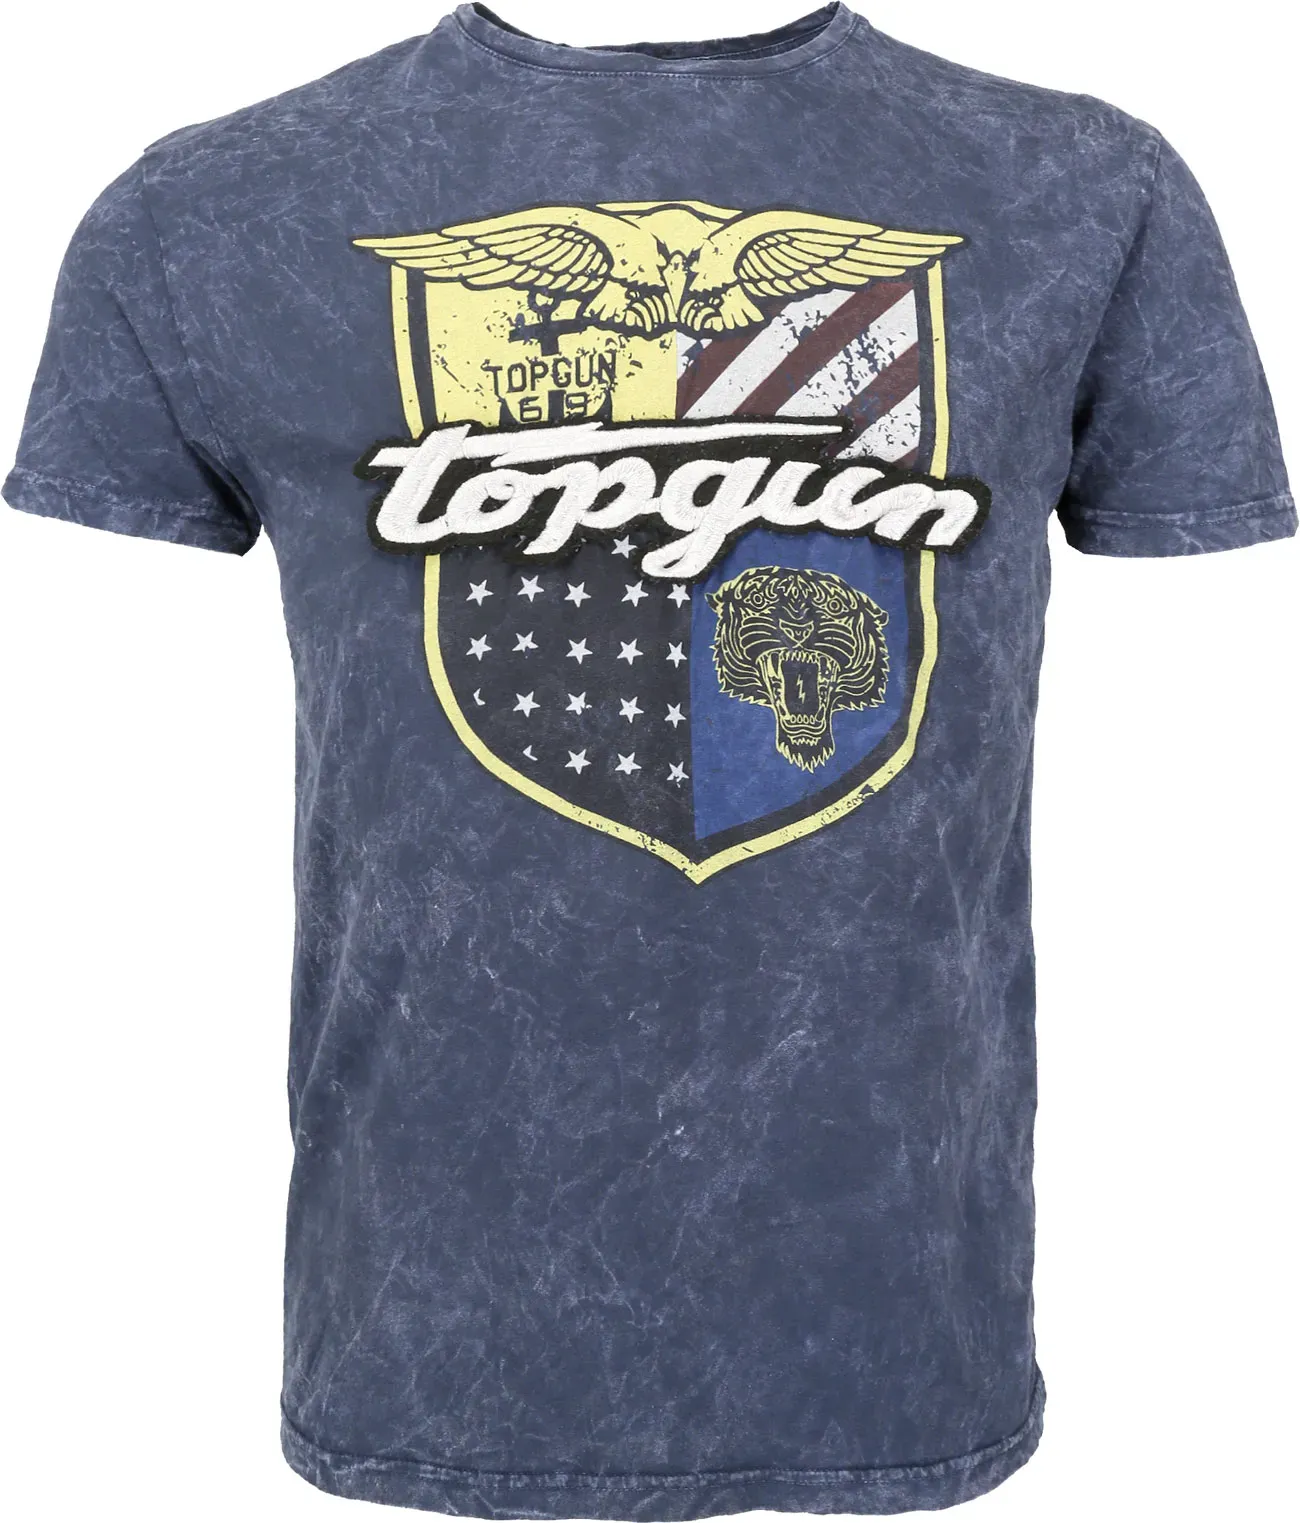 Top Gun Insignia, t-shirt - Bleu Foncé - 3XL